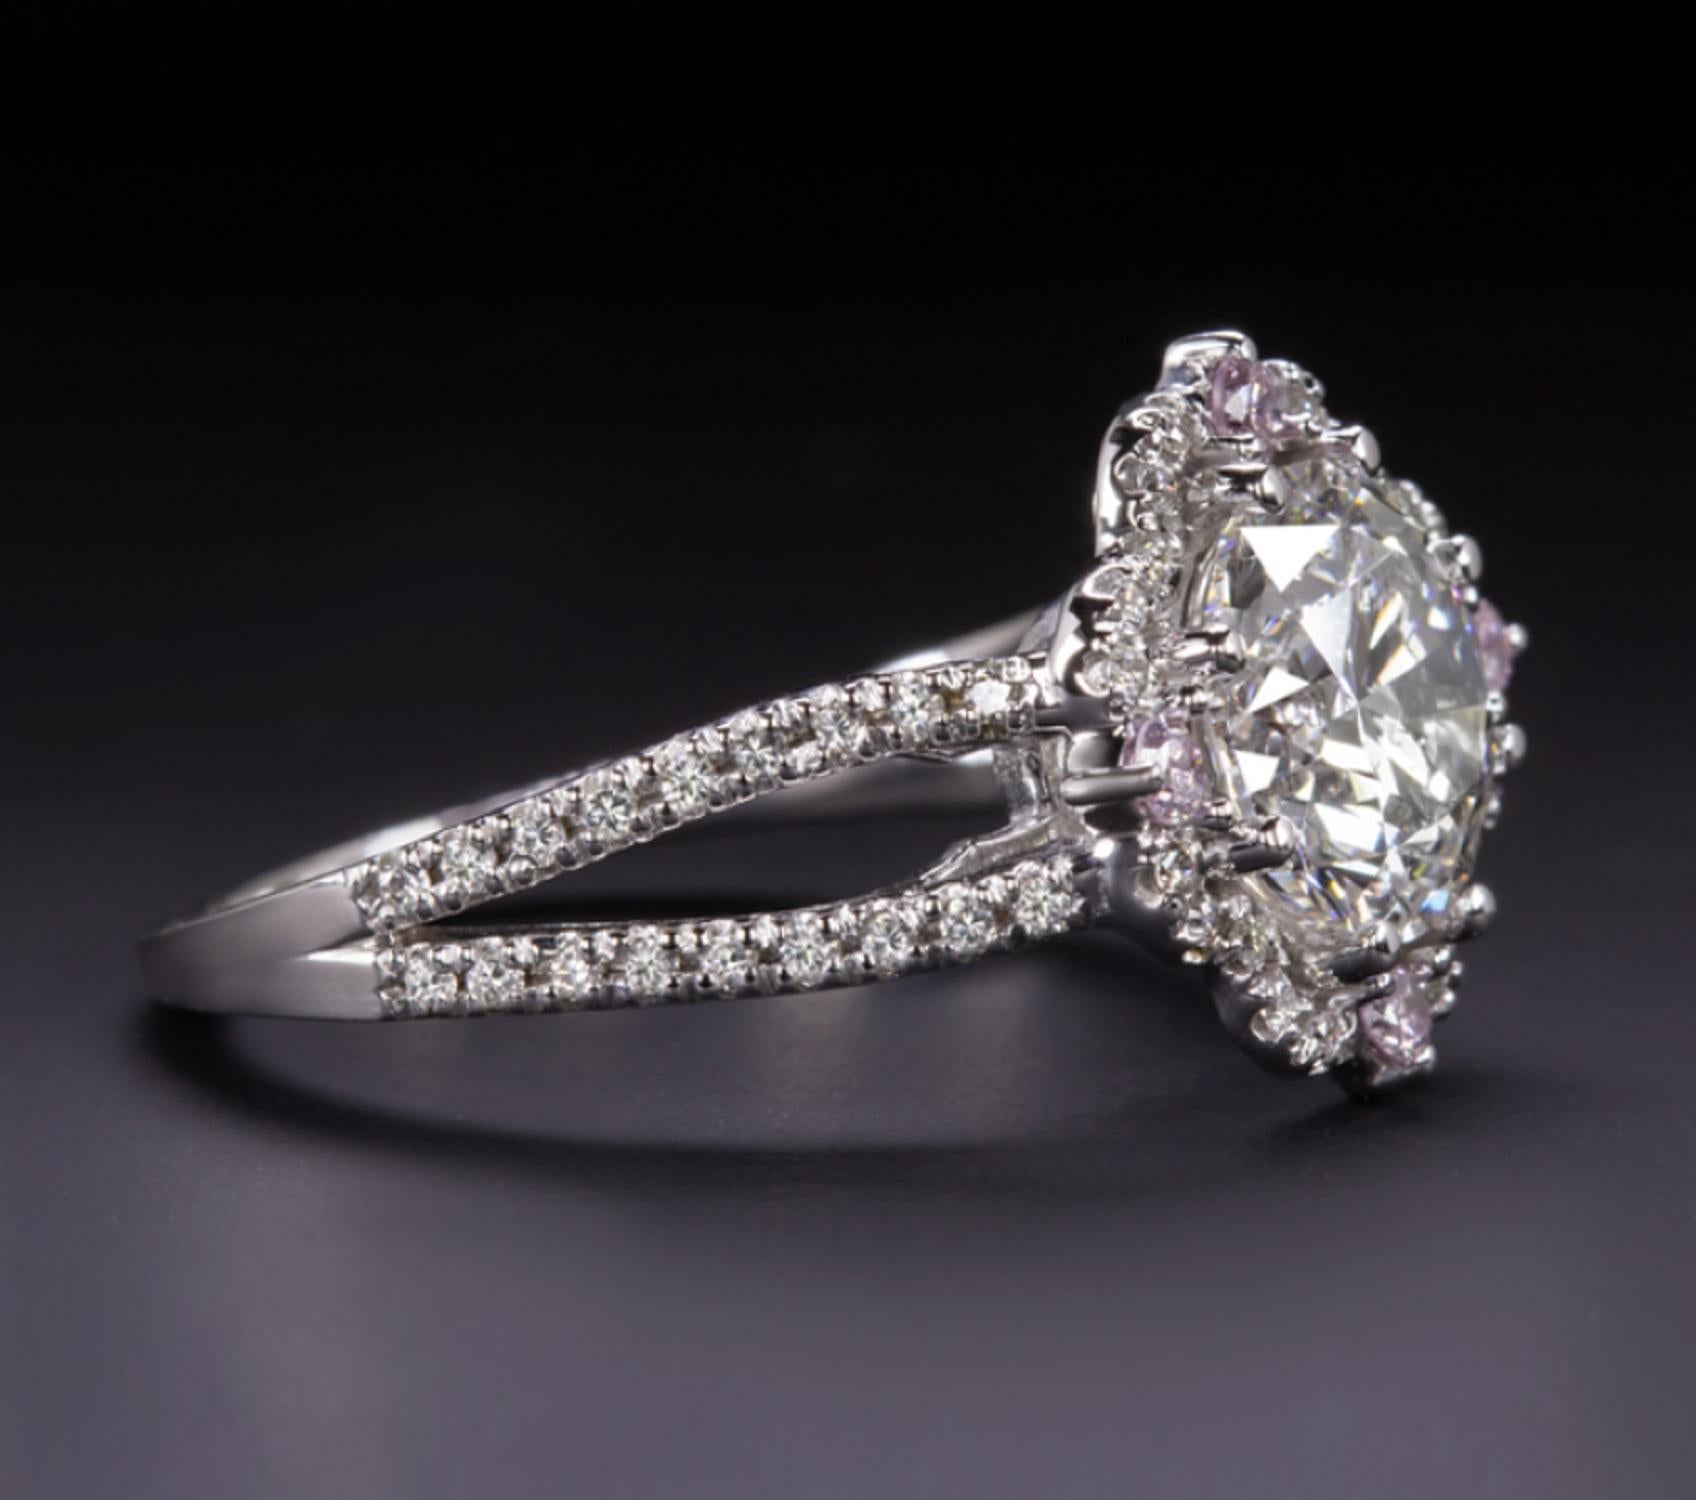 Amazing diamond solitaire ring
100% Eye clean white diamond
GIA Certified 
pink diamond setting